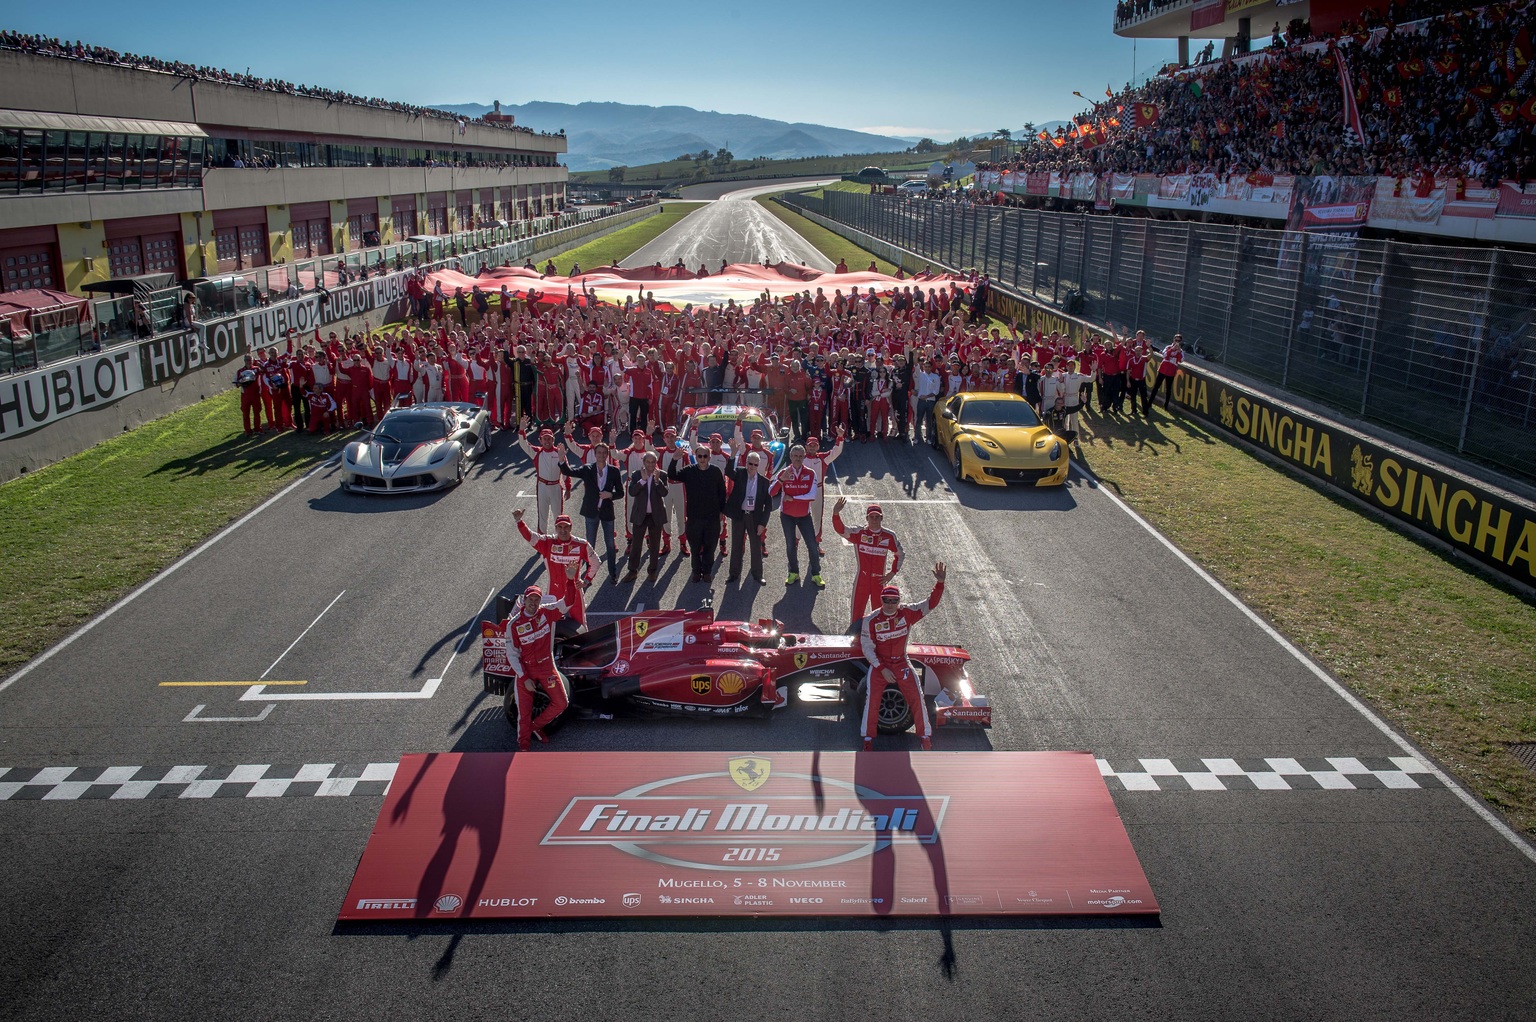 2015 Ferrari Finali Mondiali